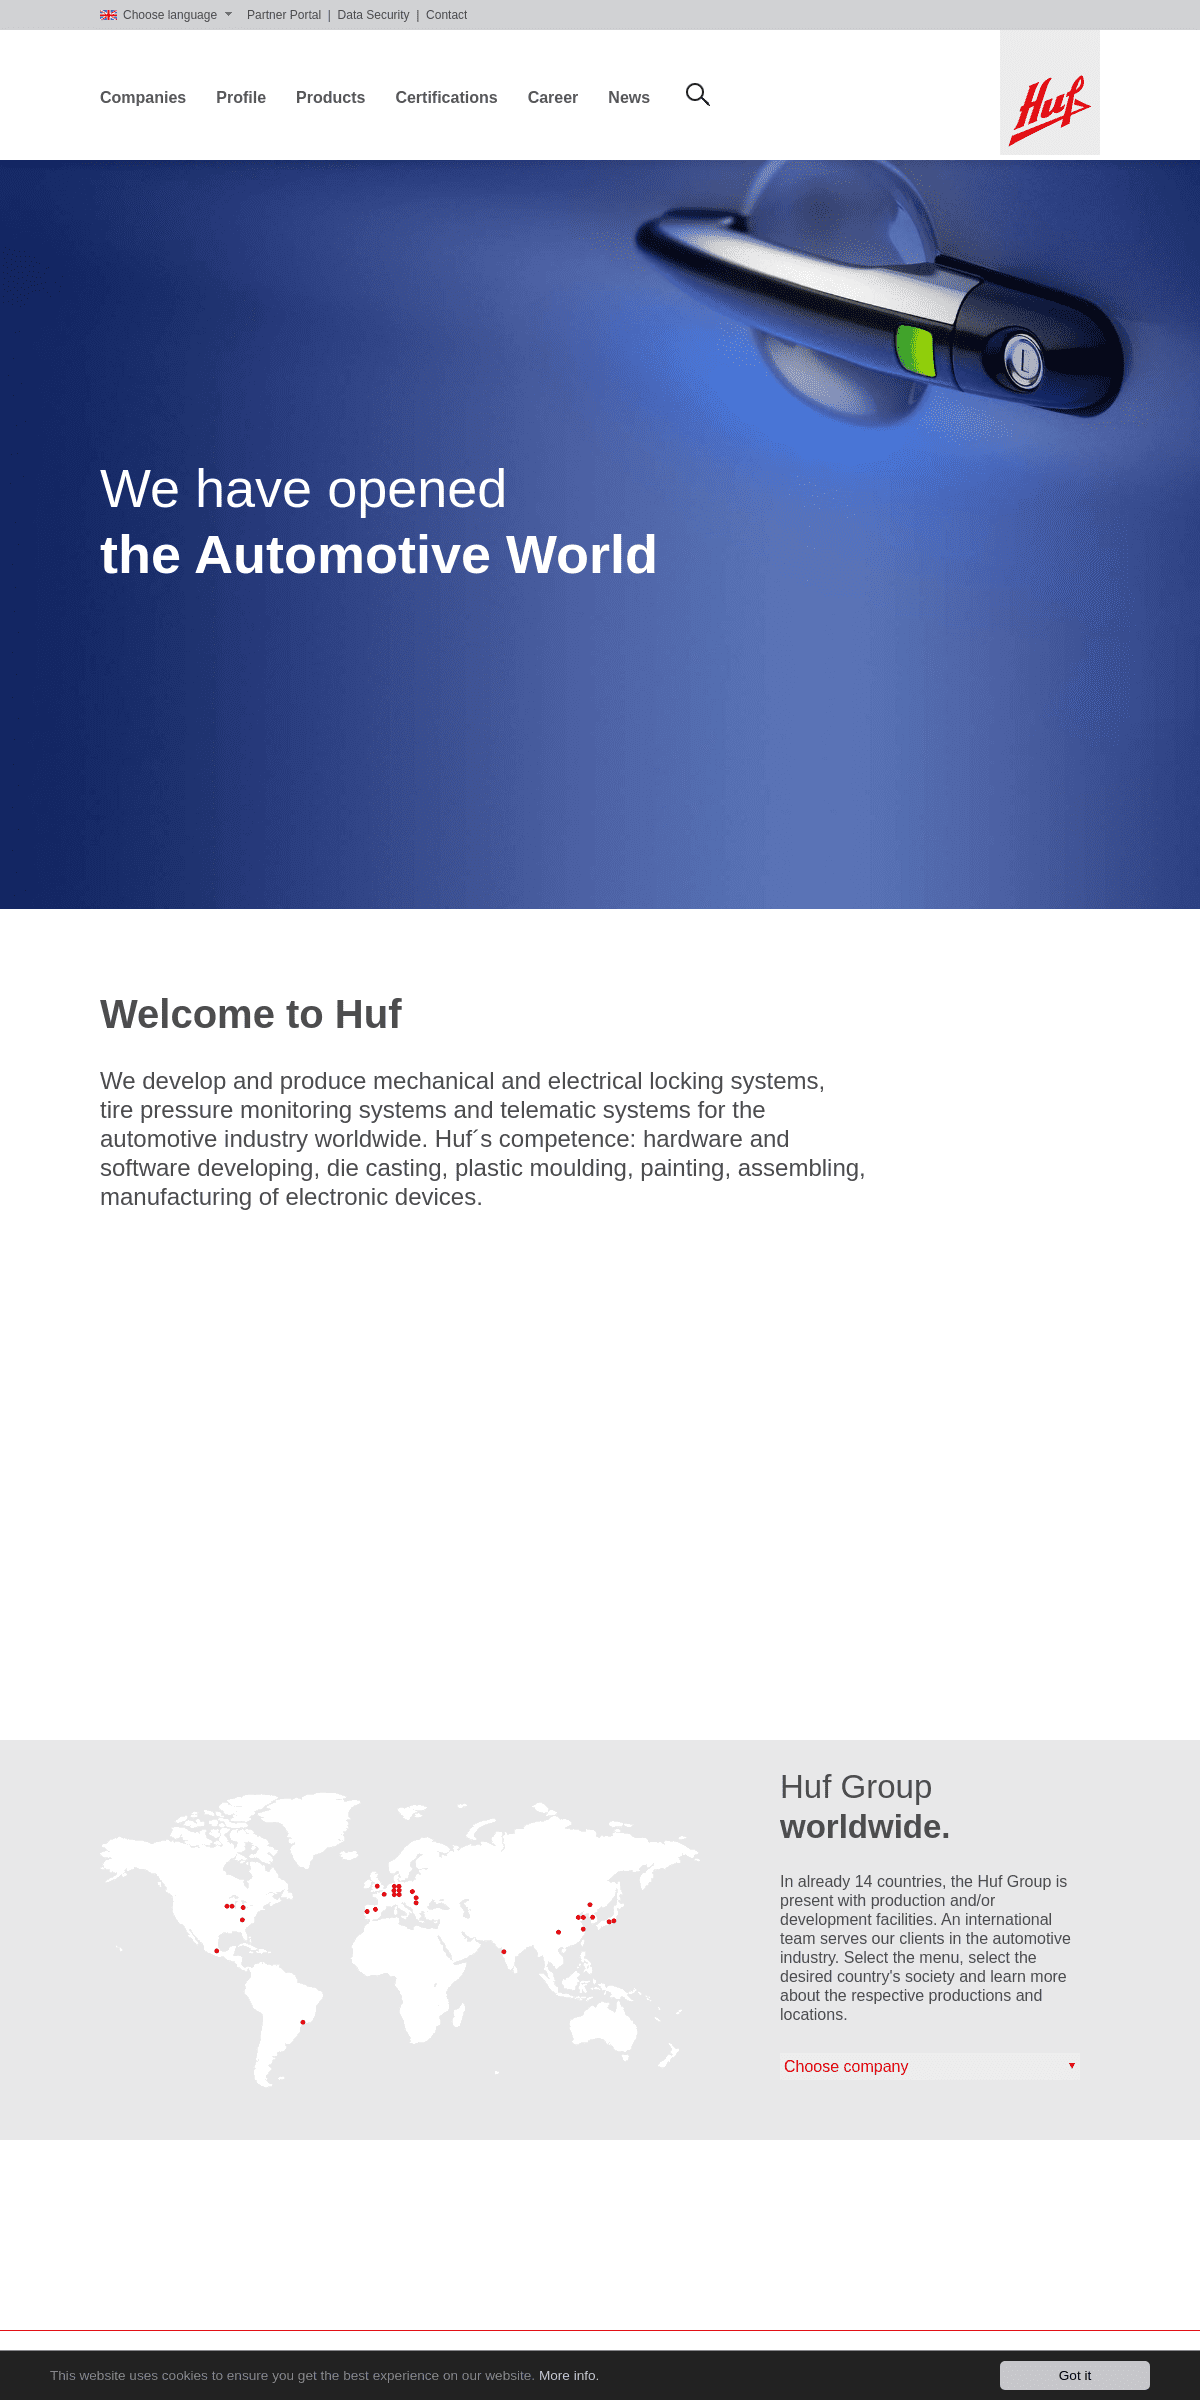 A complete backup of huf-group.com